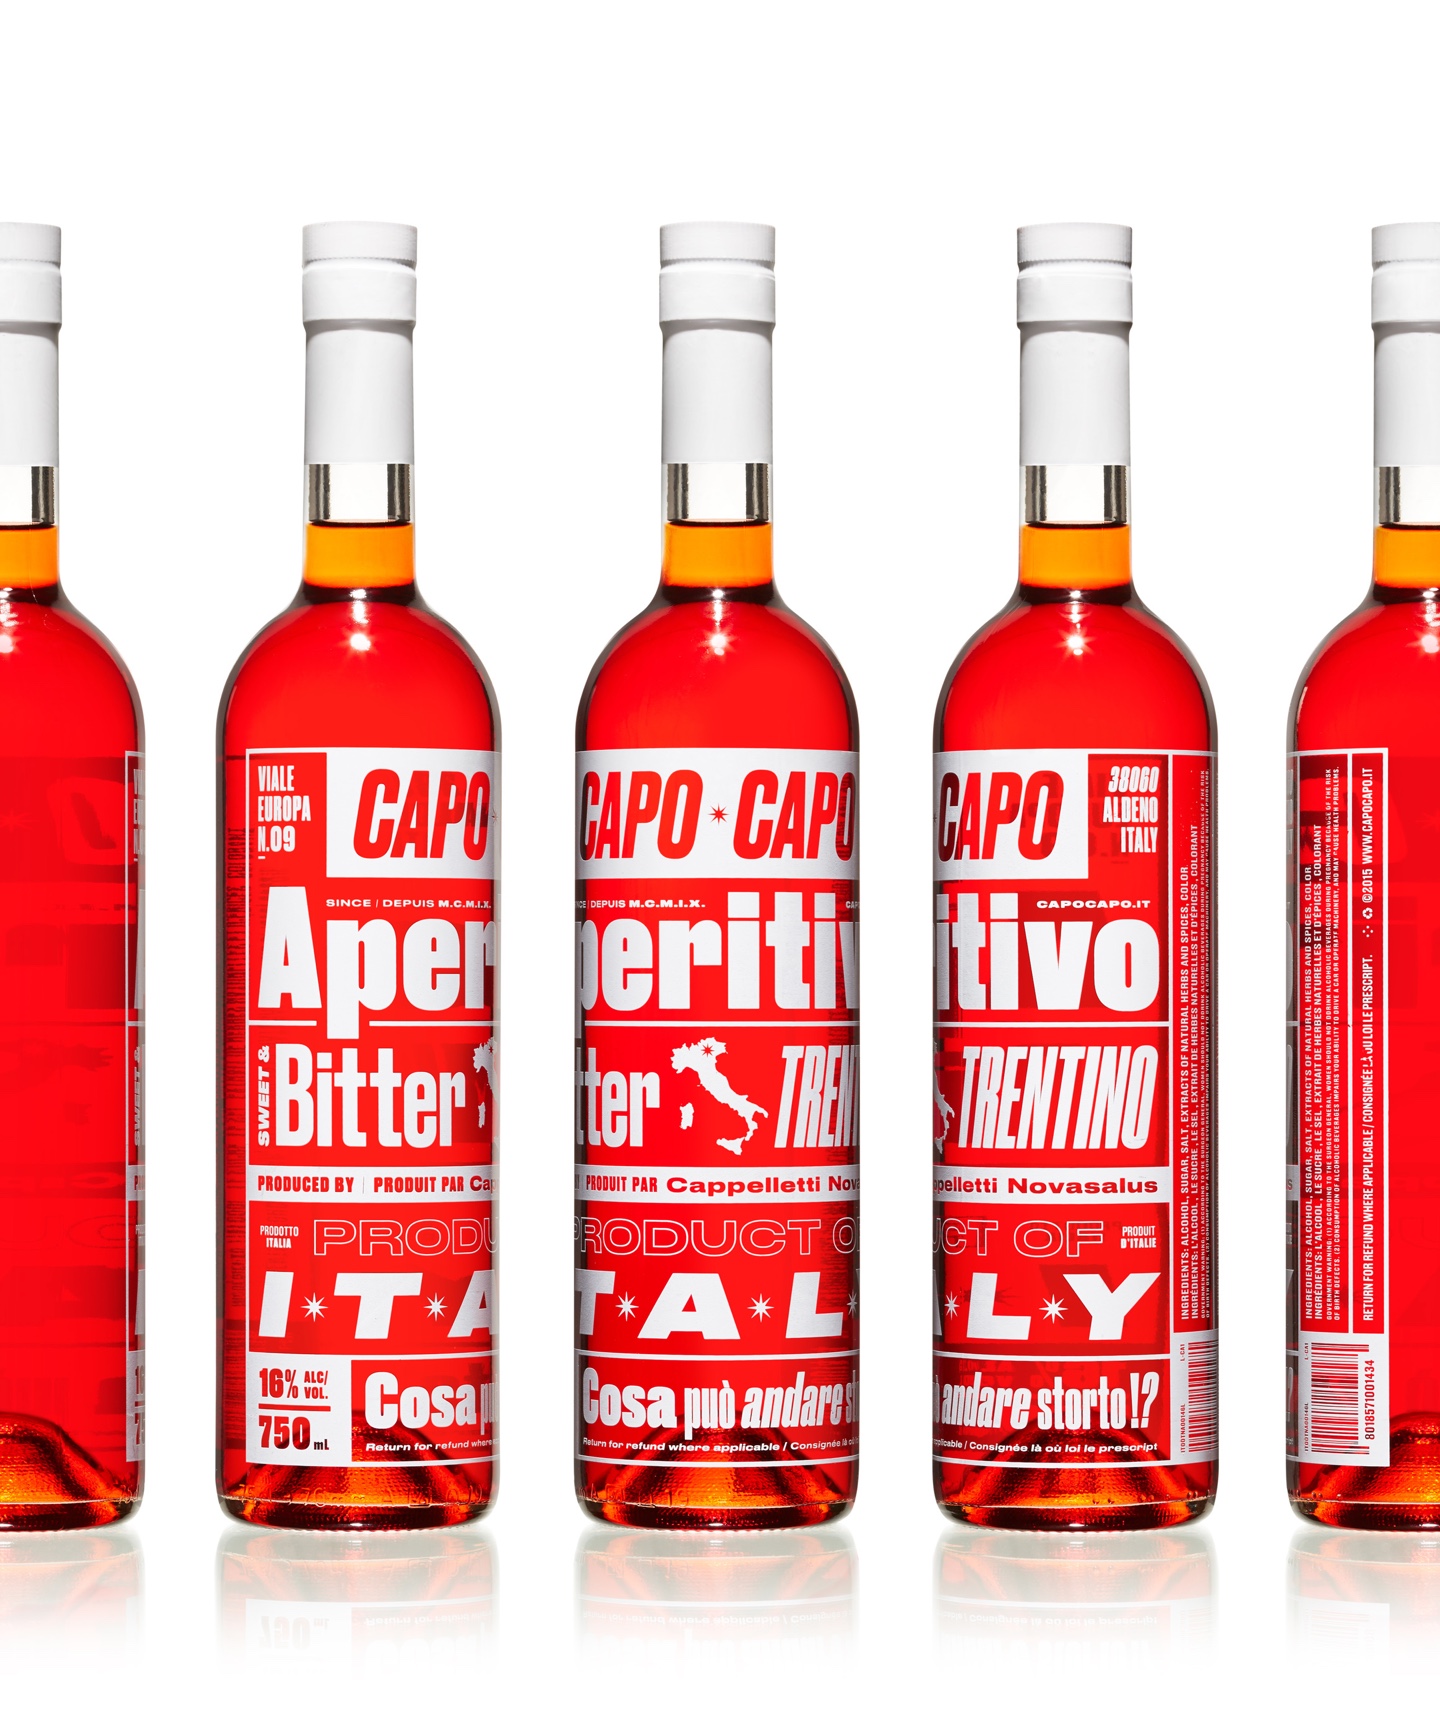 Capo Capo Bottles